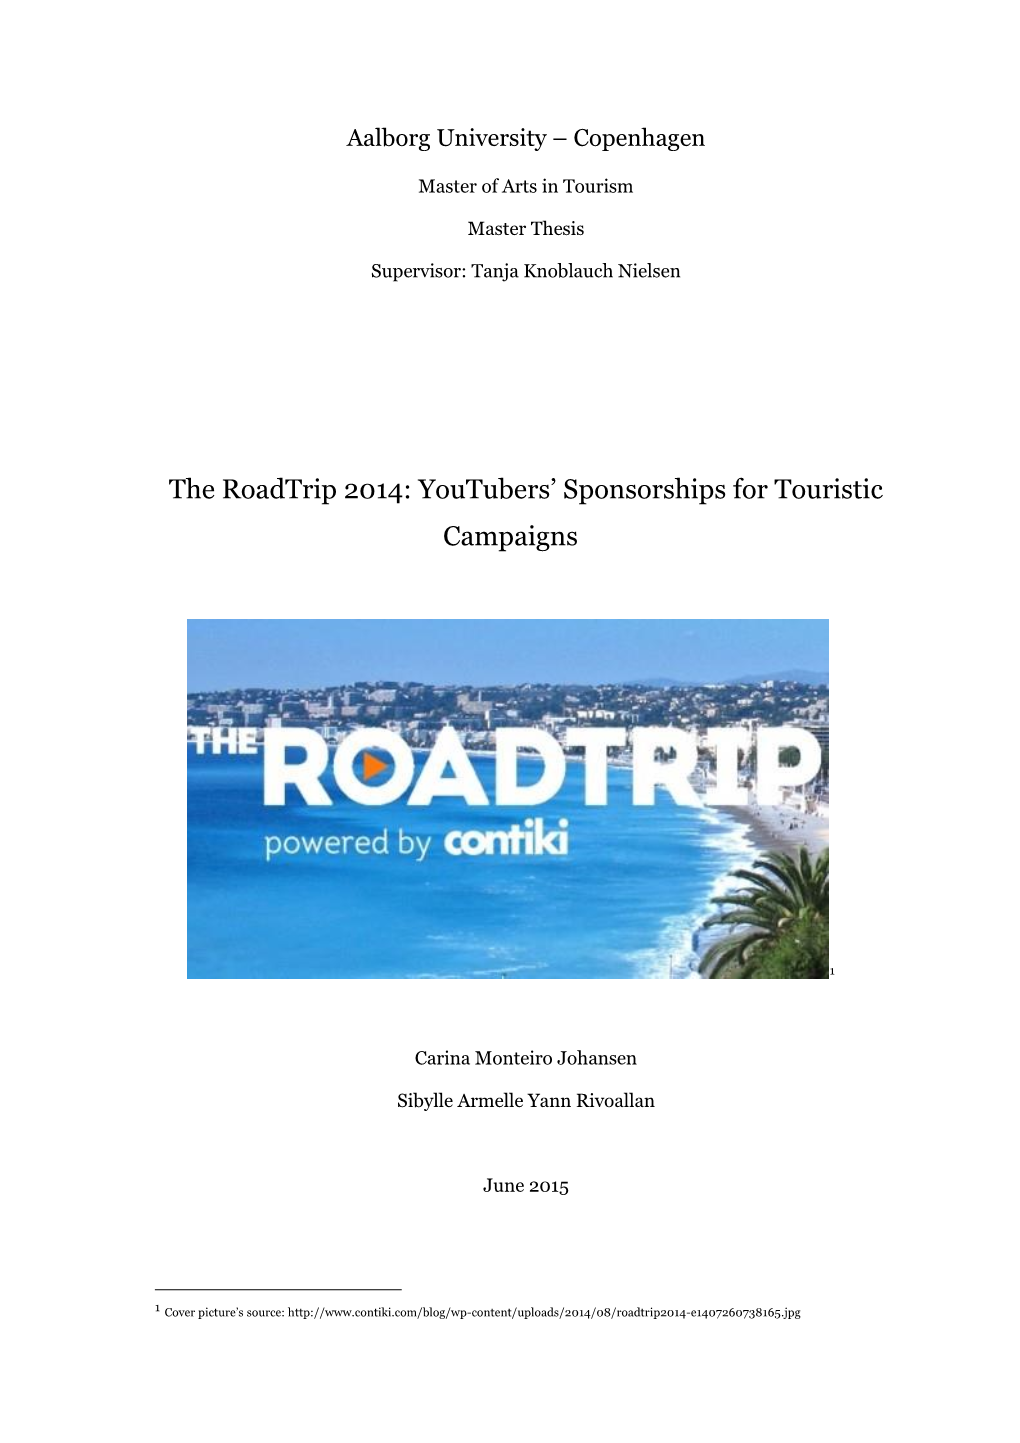 The Roadtrip 2014: Youtubers' Sponsorships For